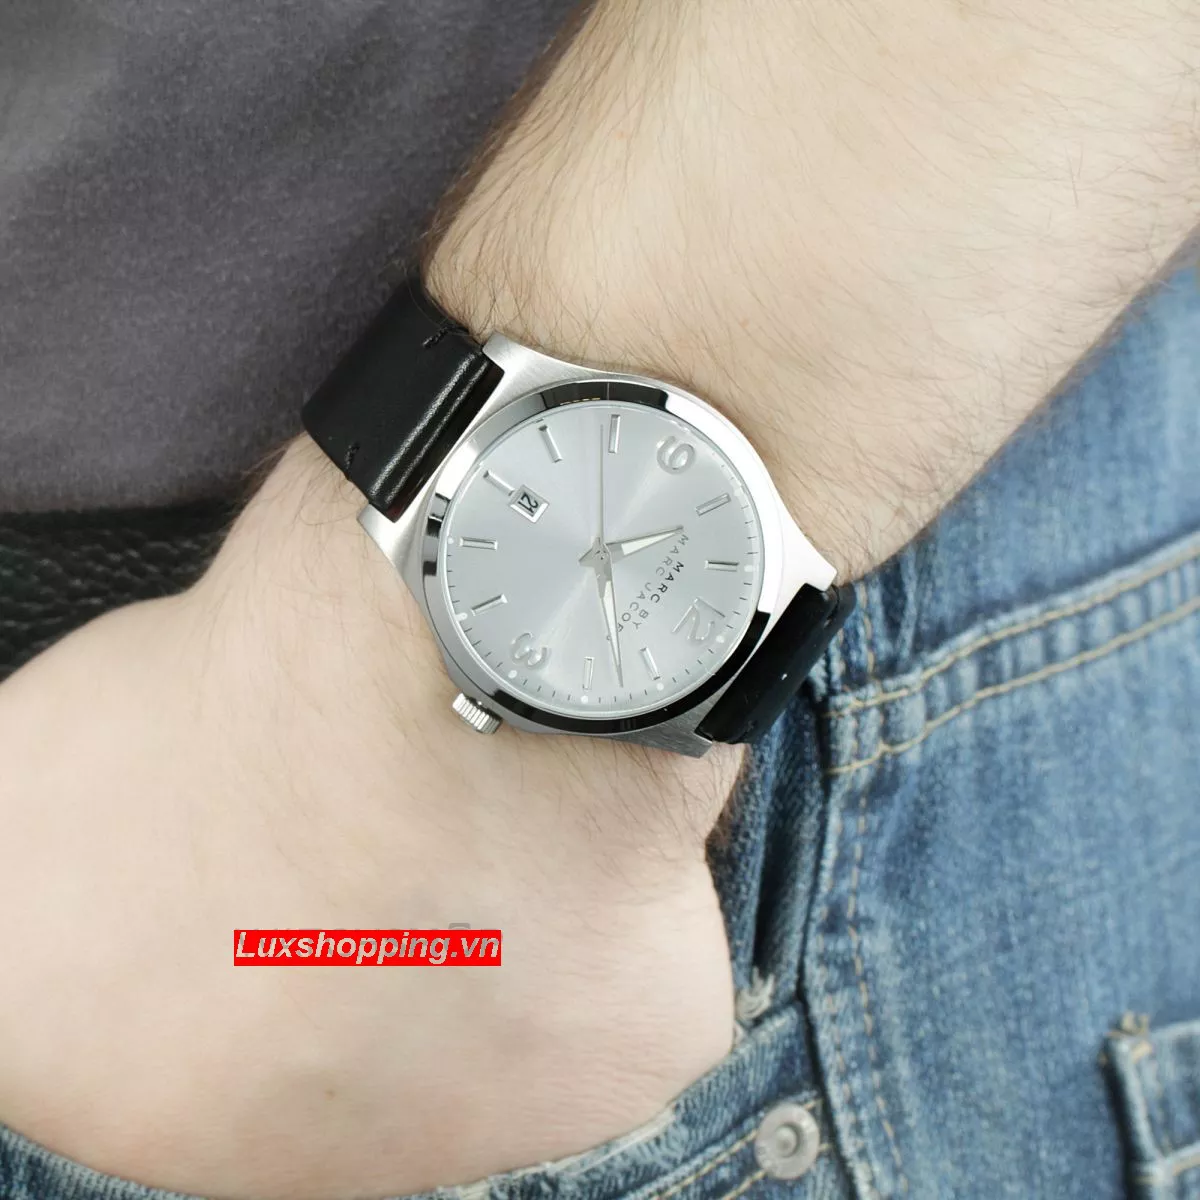 Marc by Marc Jacobs Men's DannyDANNY Black Leather Watch 43mm 